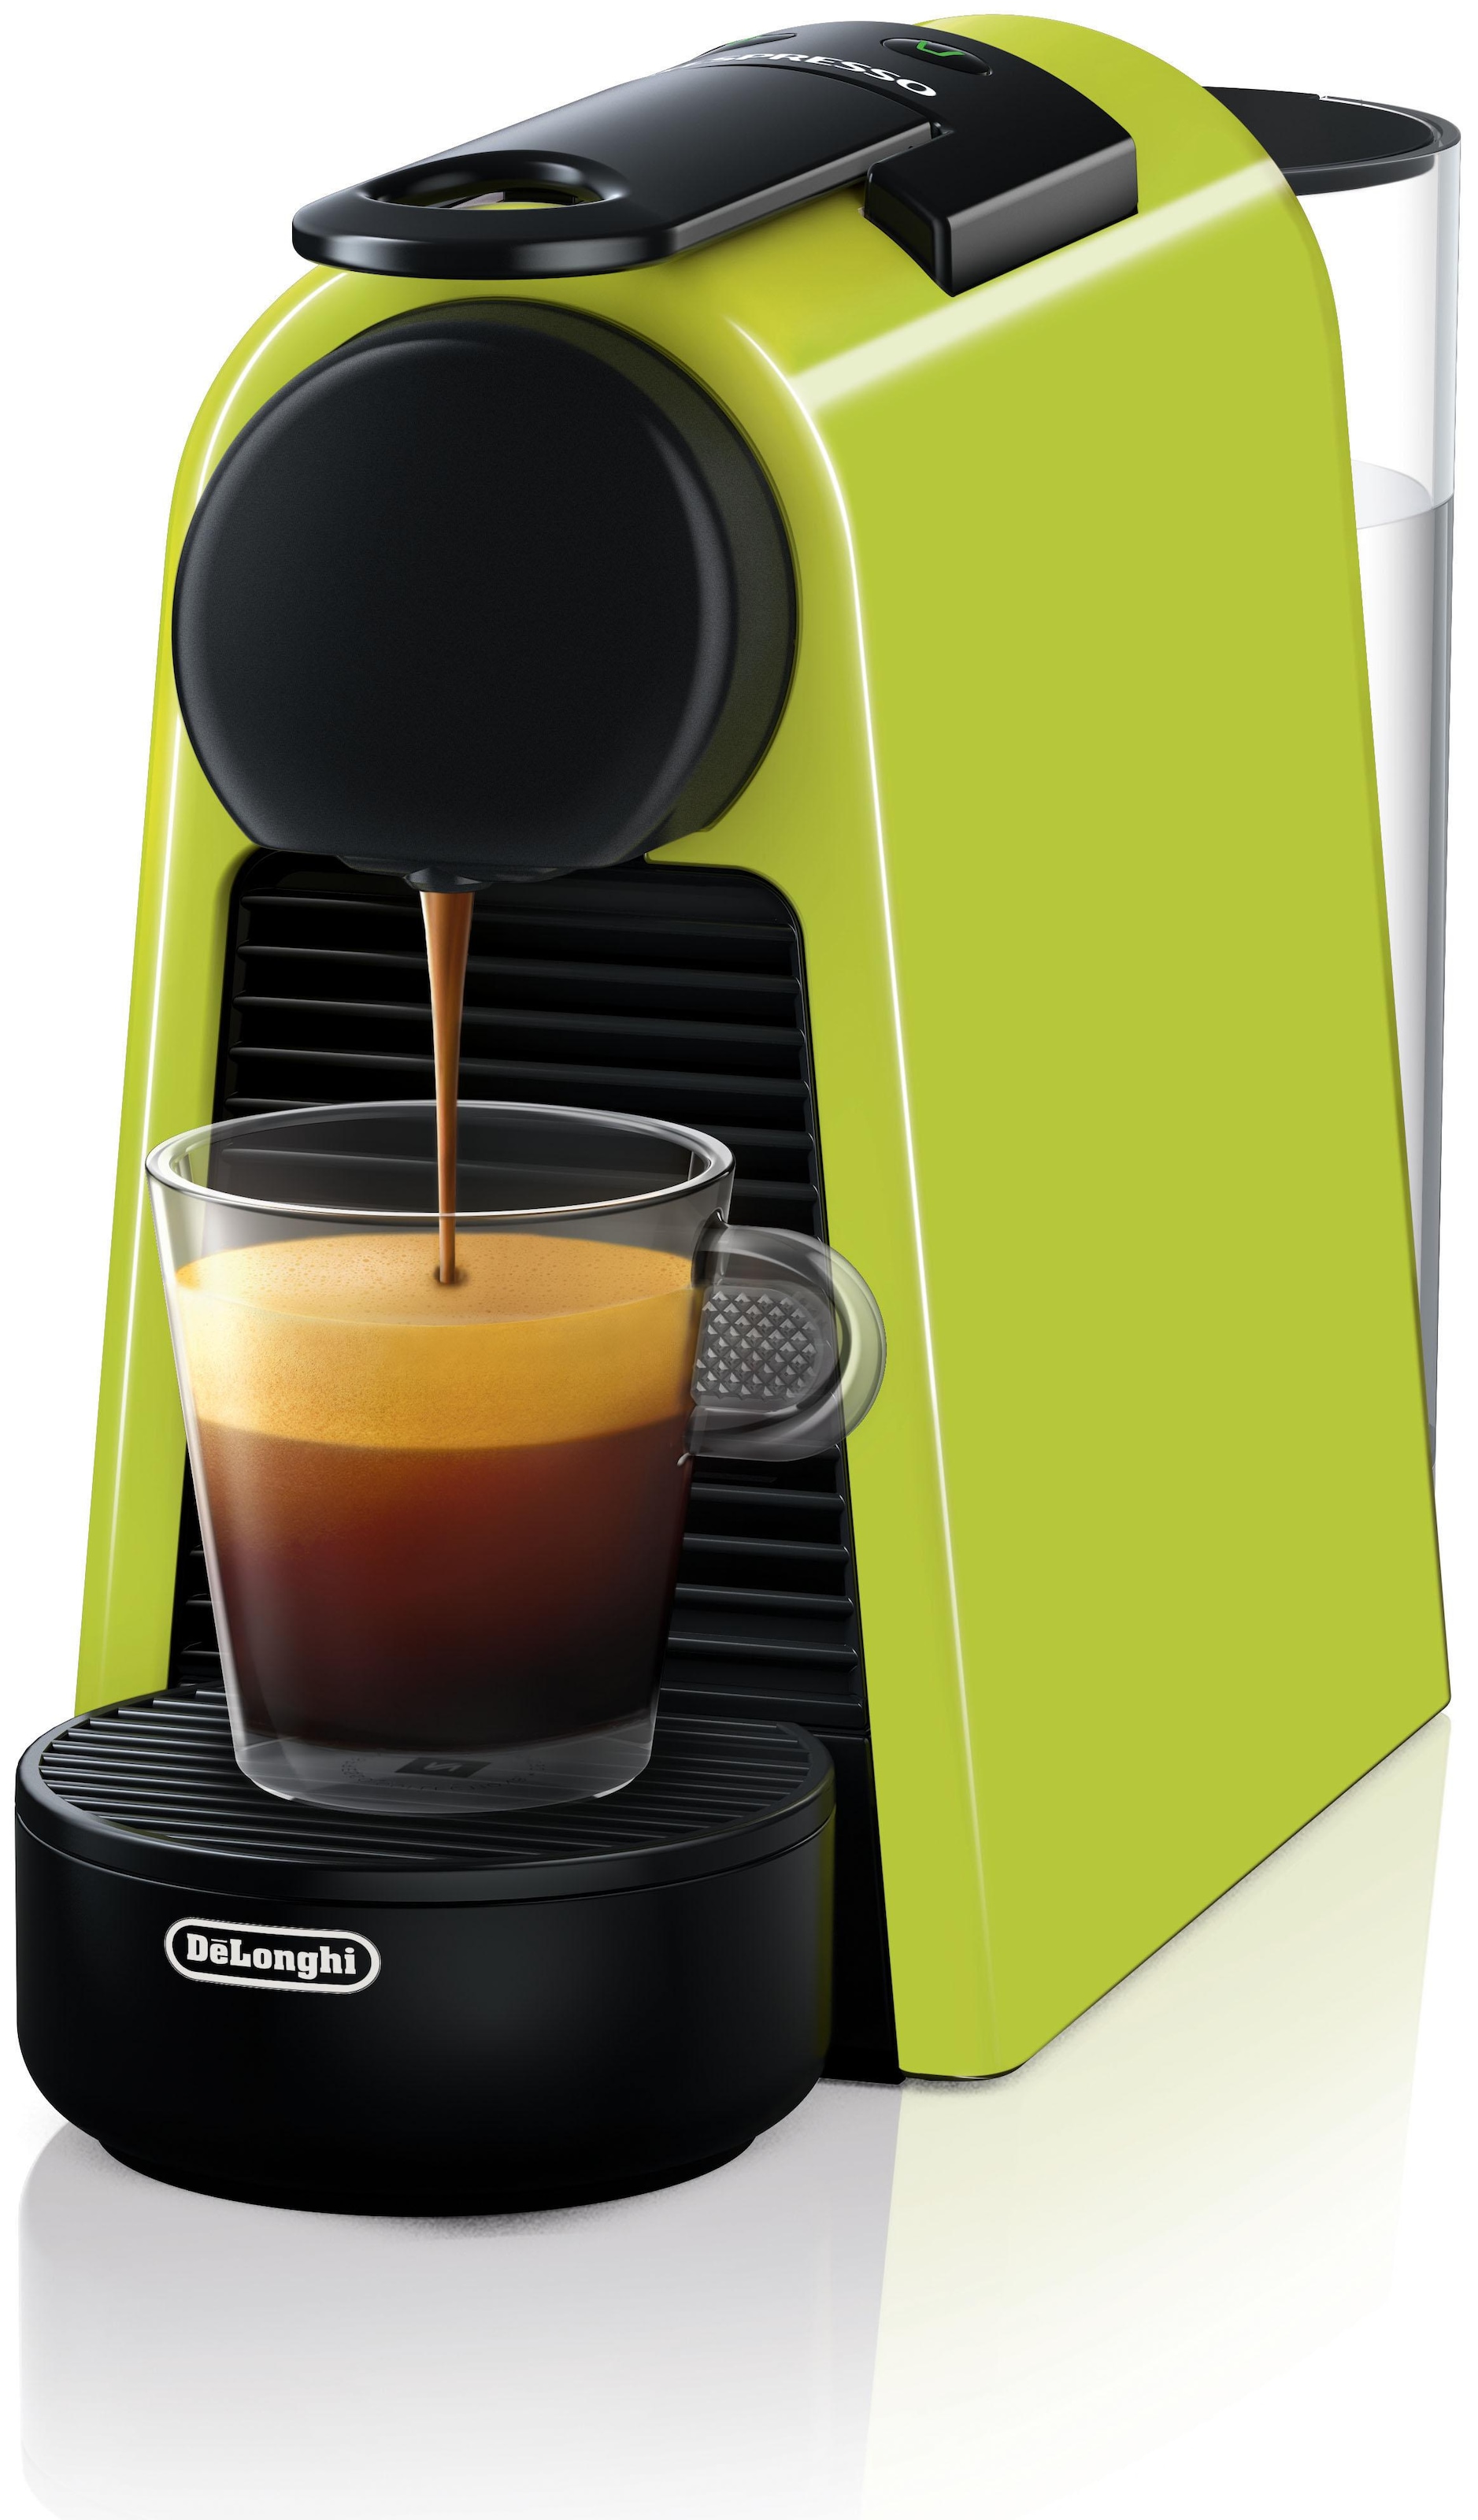 Nespresso Kapselmaschine "Essenza Mini EN85.L von DeLonghi, Lime Green", inkl. Willkommenspaket mit 7 Kapseln